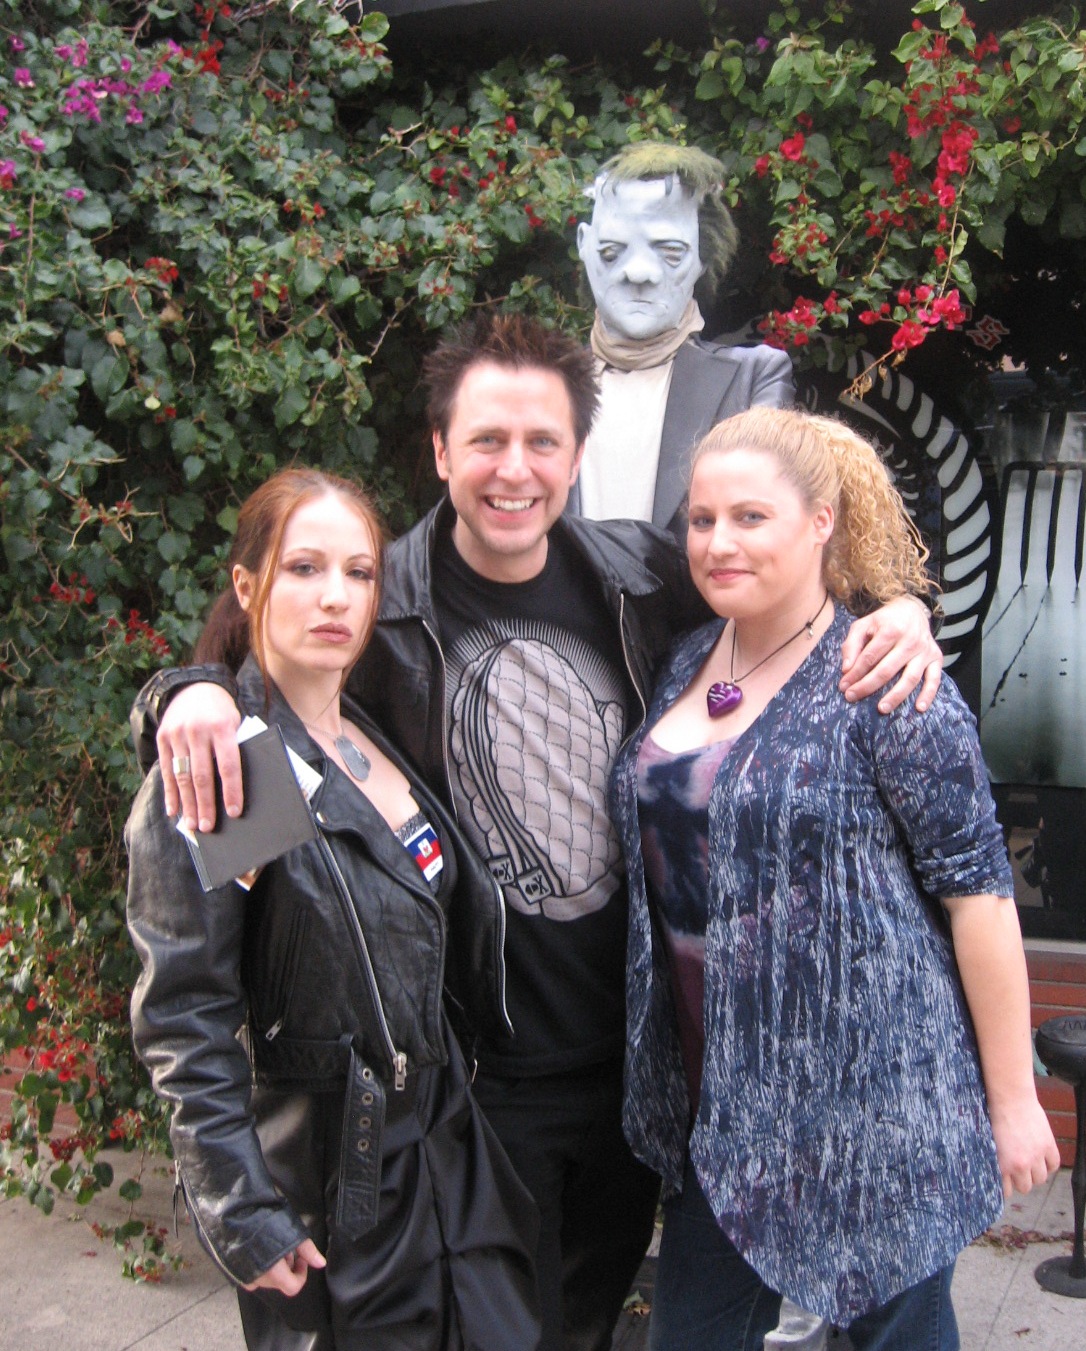 Tara Cardinal, James Gunn, and Megan Frances at the Women in Horror Blood Drive to Benefit Haiti, 2-28-10